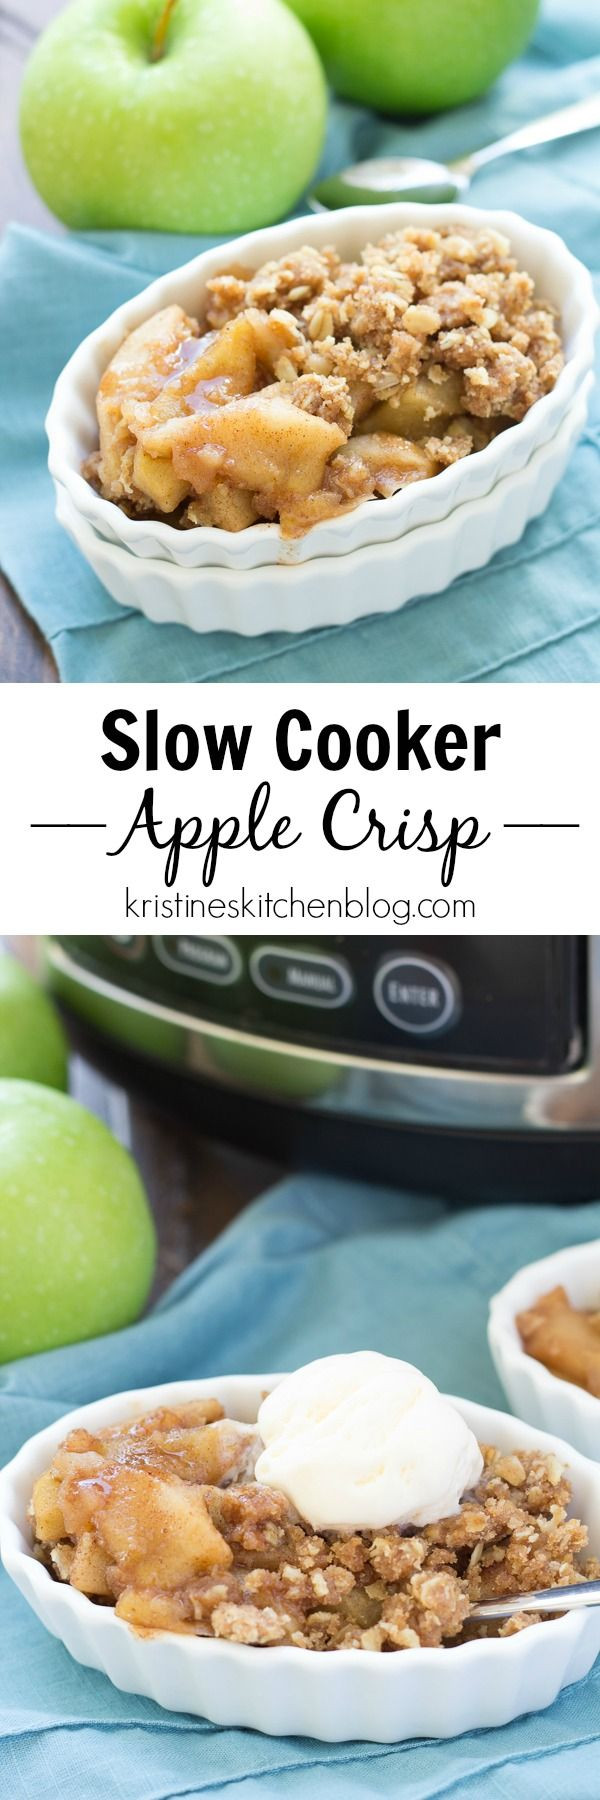 Slow Cooker Apple Recipes Healthy
 Best 25 Apple crisp easy ideas on Pinterest